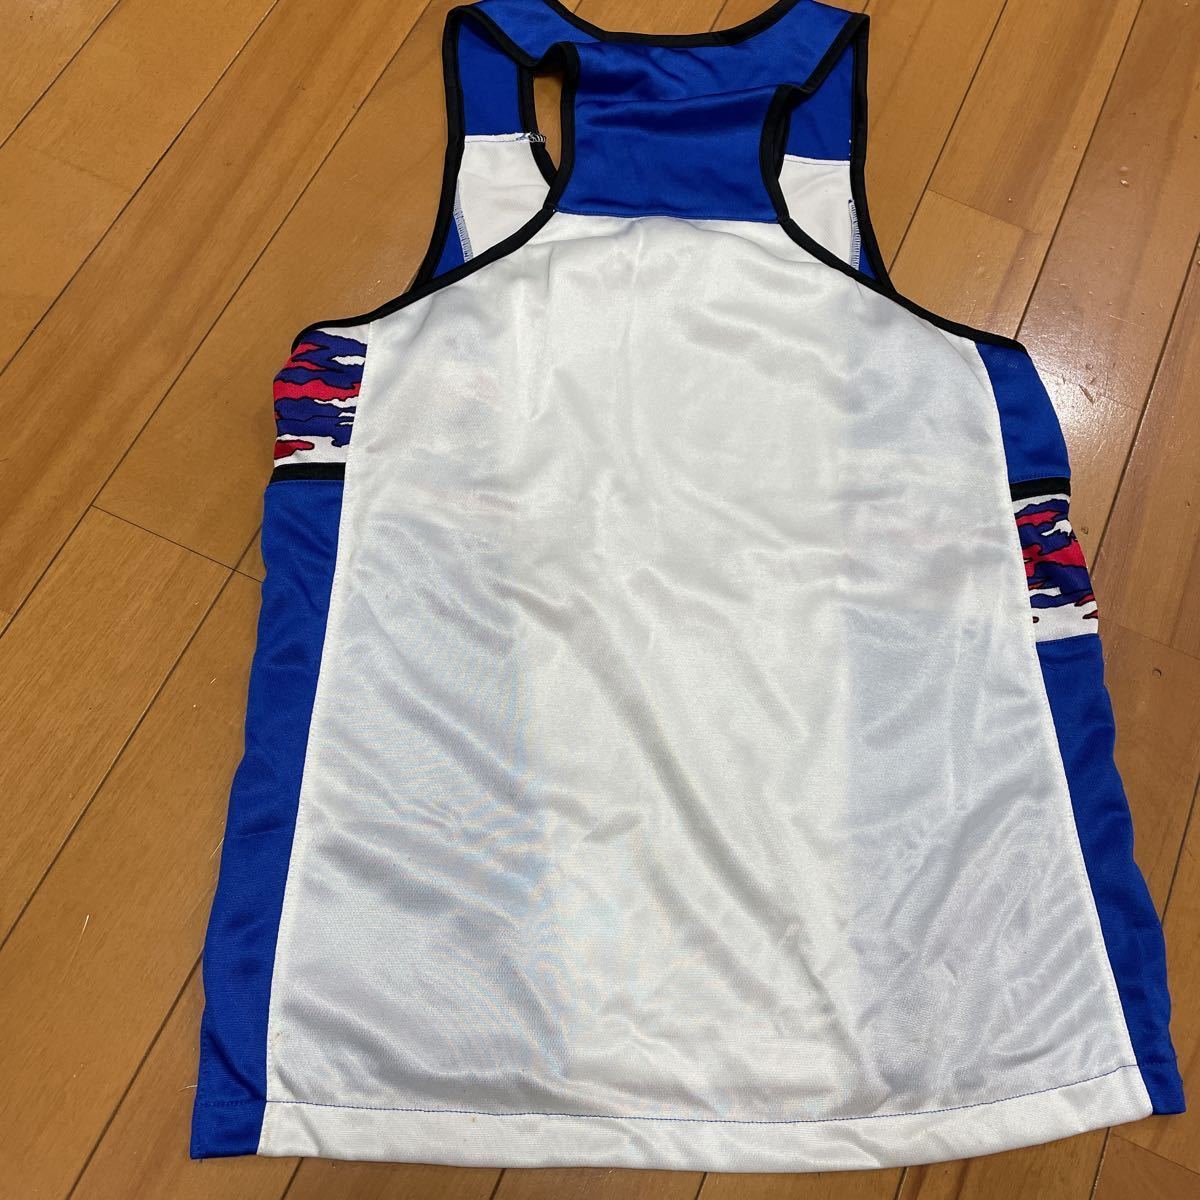 1 0 Kappa Kappa легкая атлетика форма верх и низ в комплекте бег рубашка бег брюки M размер 